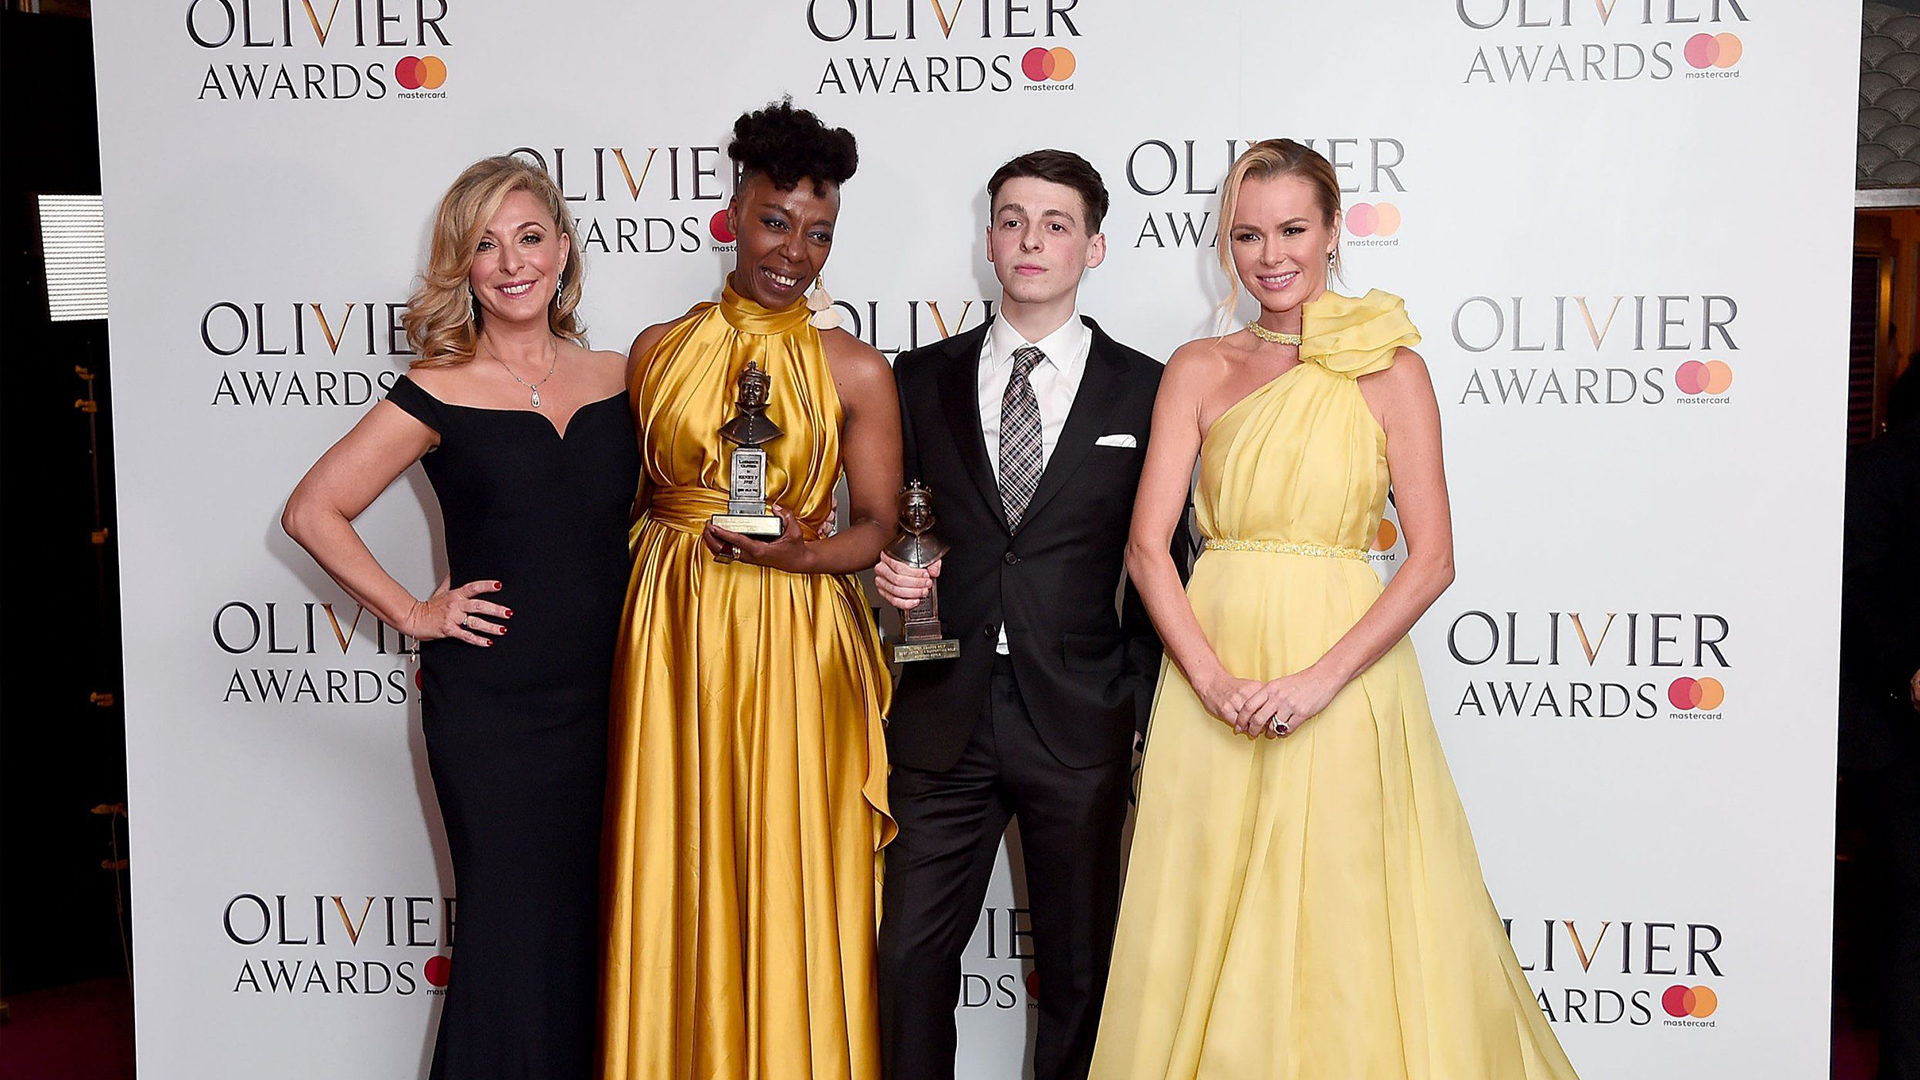 The Olivier Awards Awards